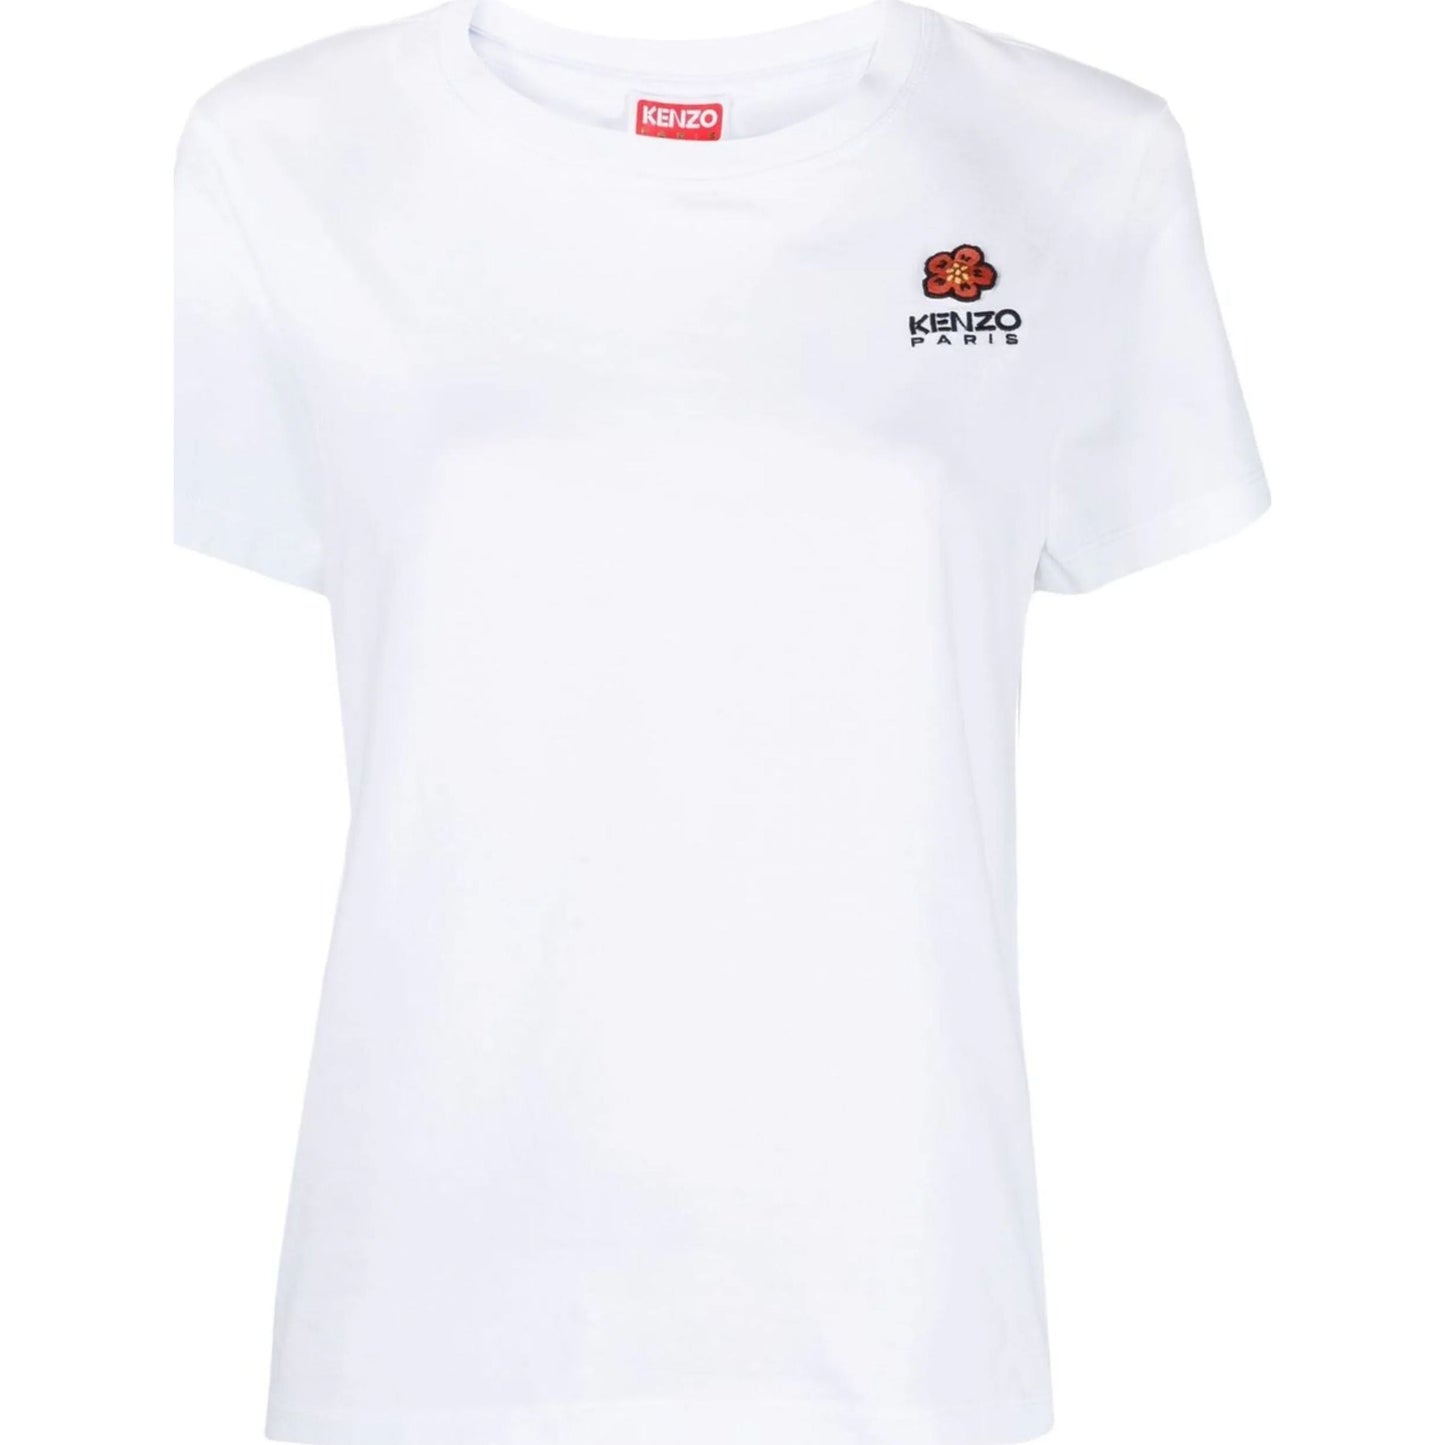 KENZO marškinėliai trumpomis rankovėmis moterims, Balta, Boke crest classic t-shirt